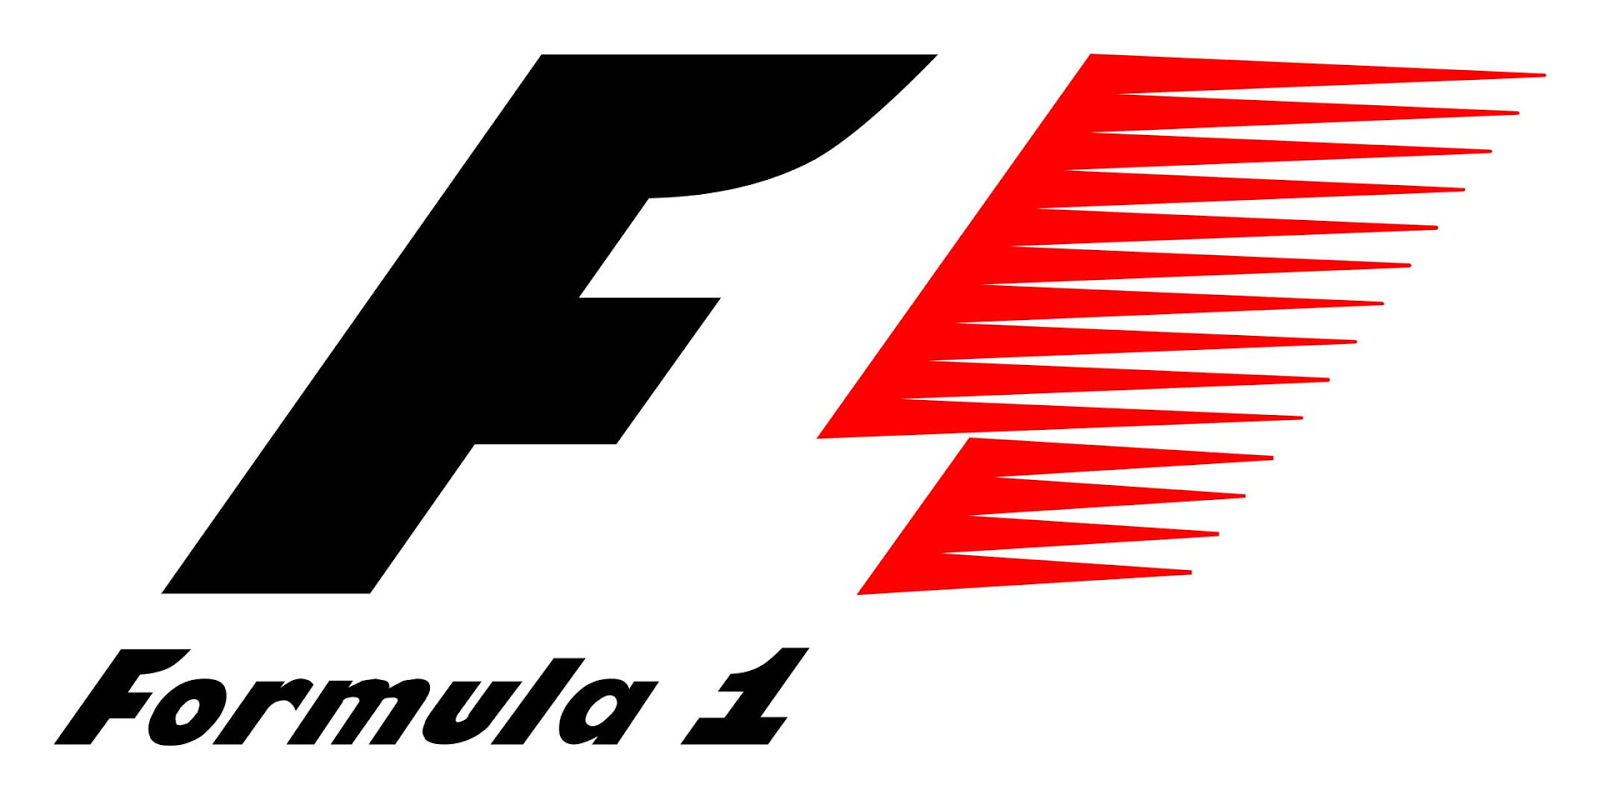 F1 Logo and Brand Spotlight